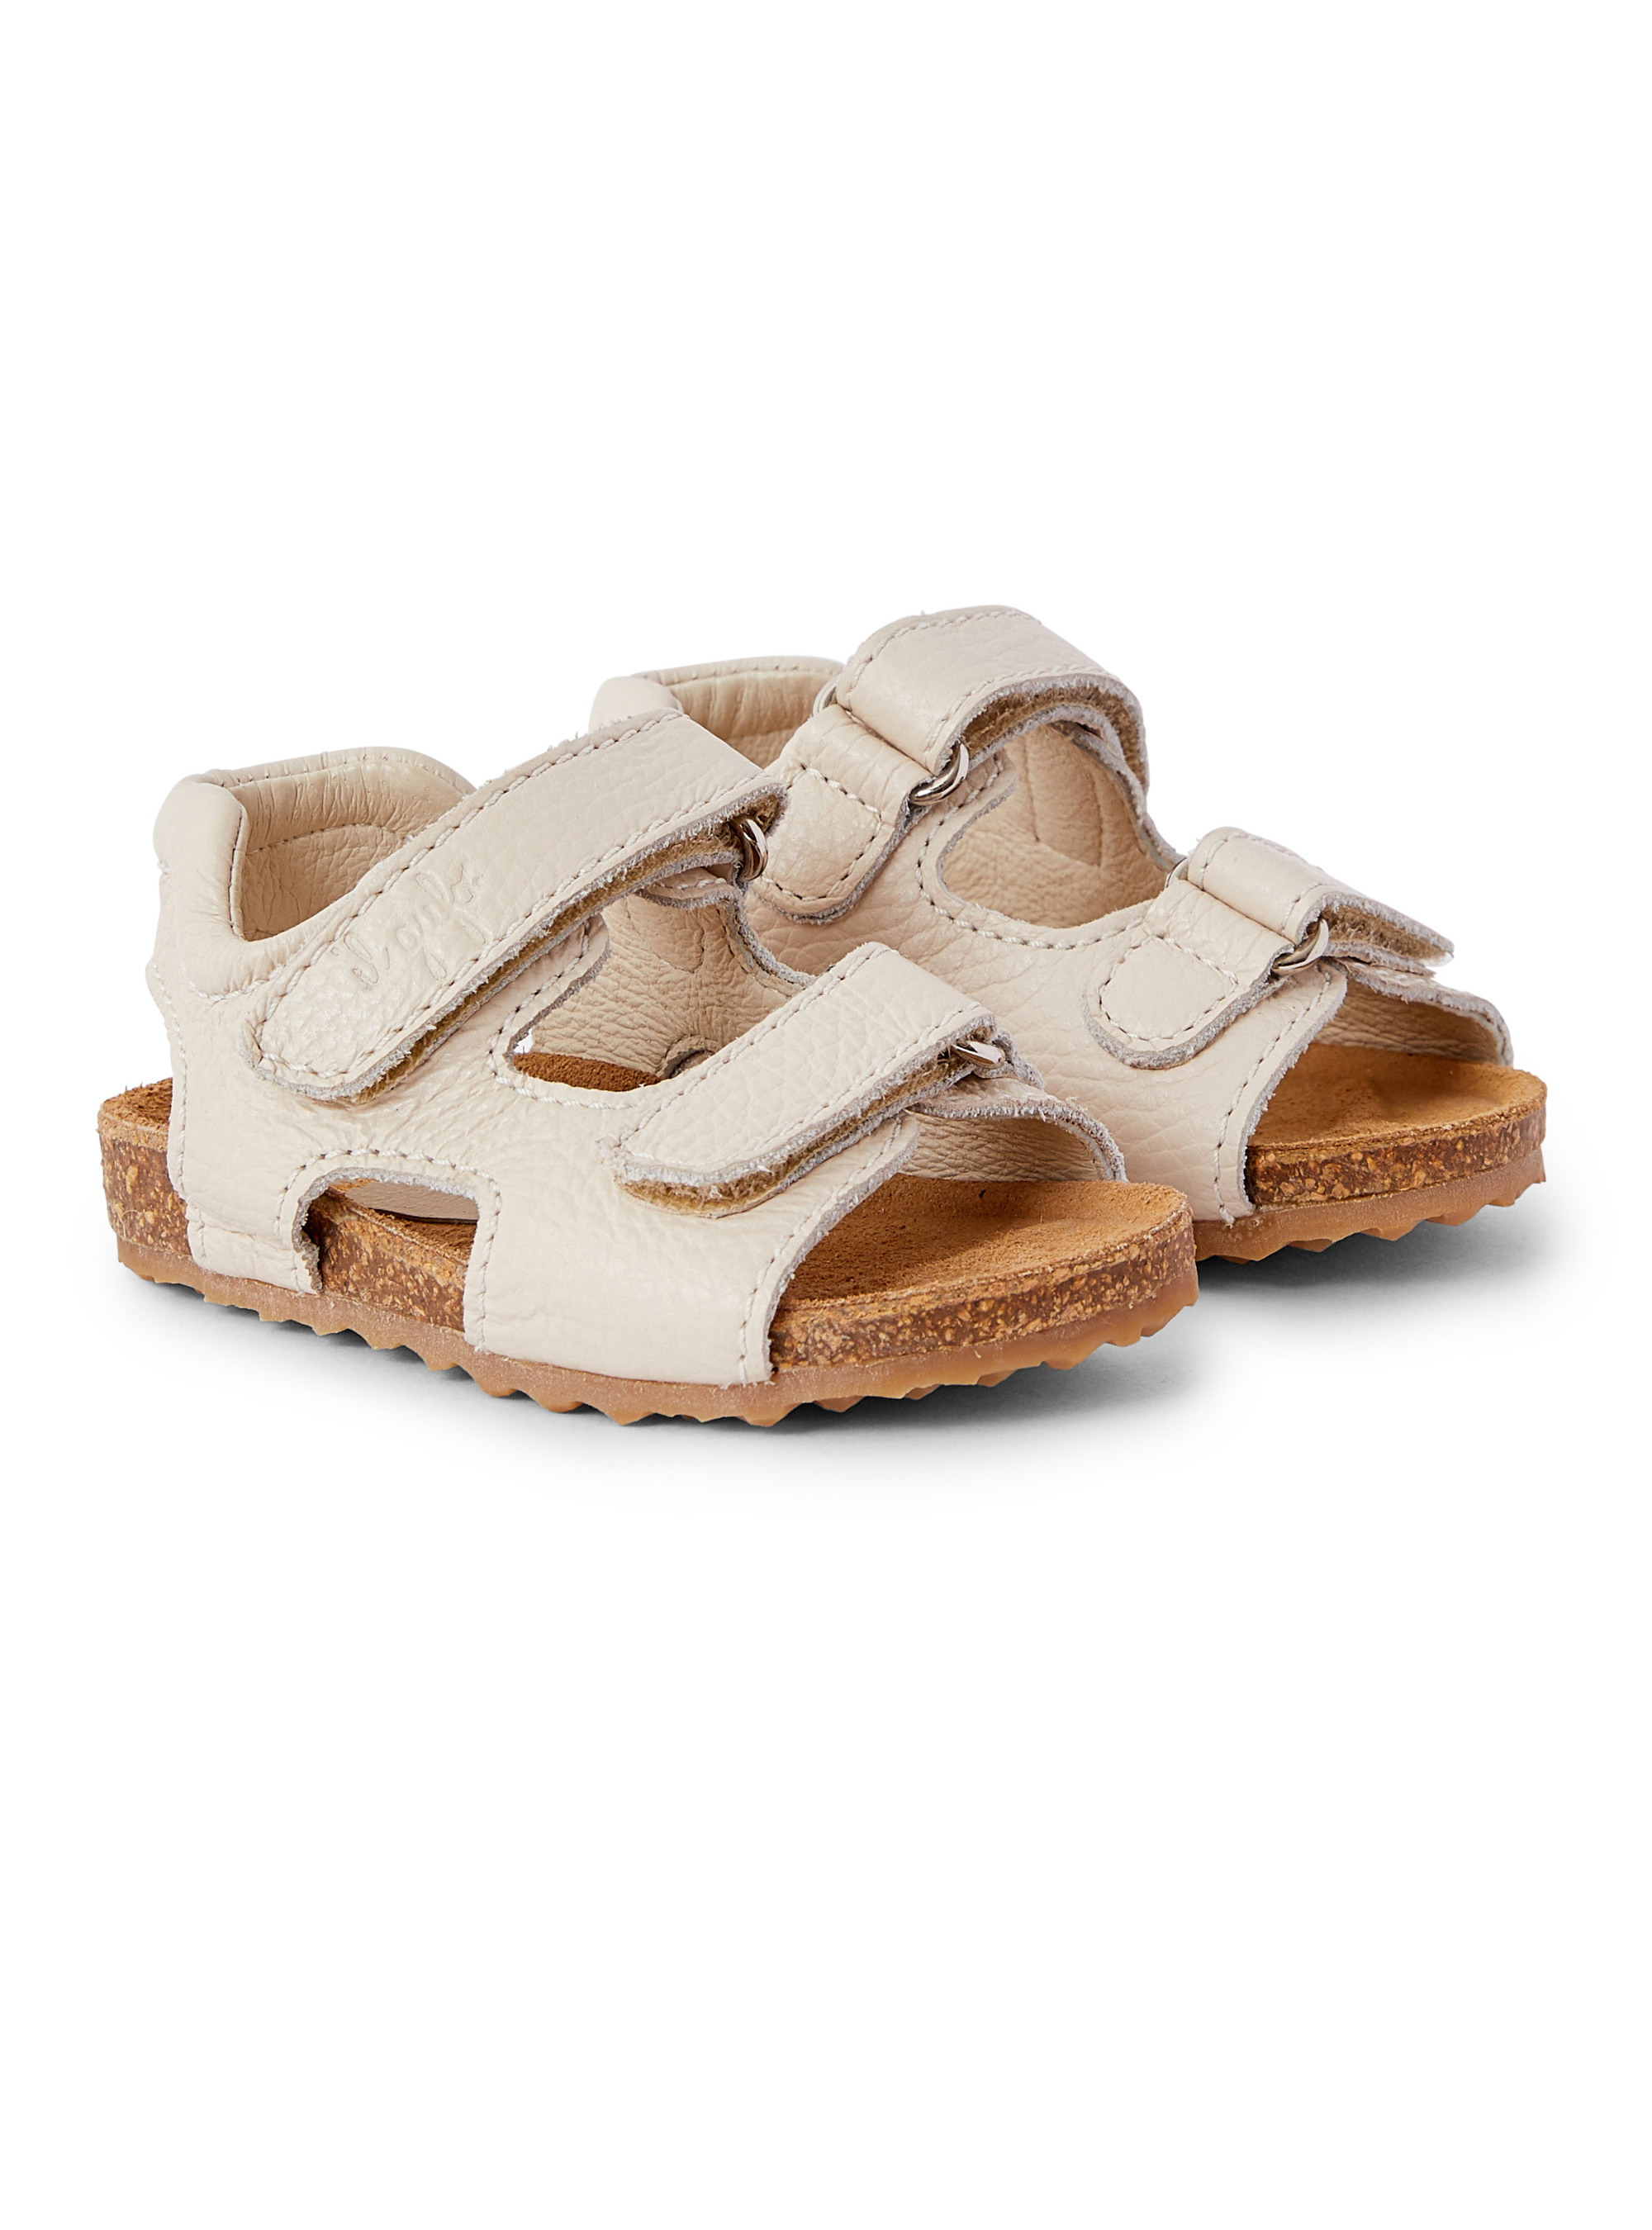 Baby-Sandale sandfarben - Schuhe - Il Gufo